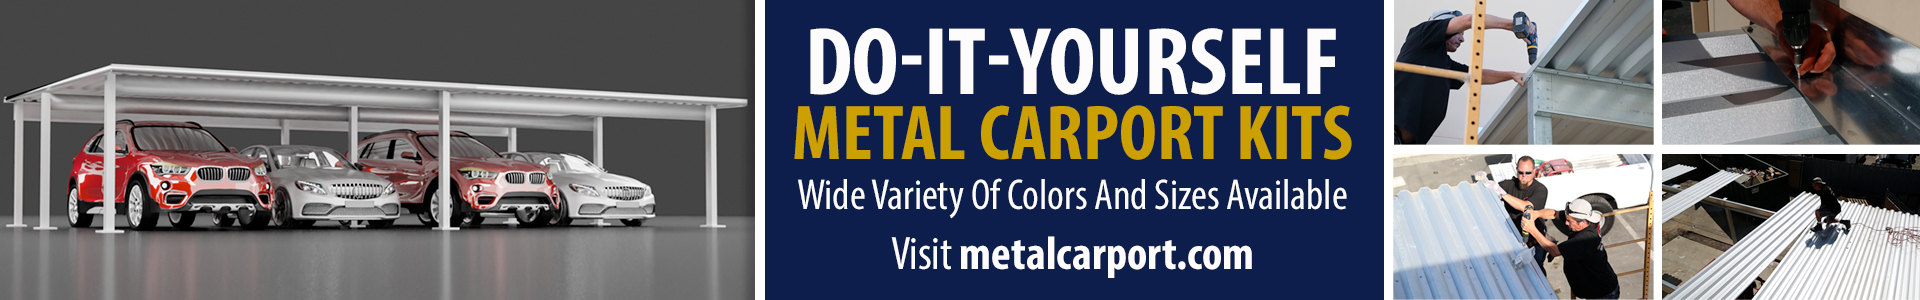 Do-It-Yourself Metal RV Carport Kits Web Banner 02